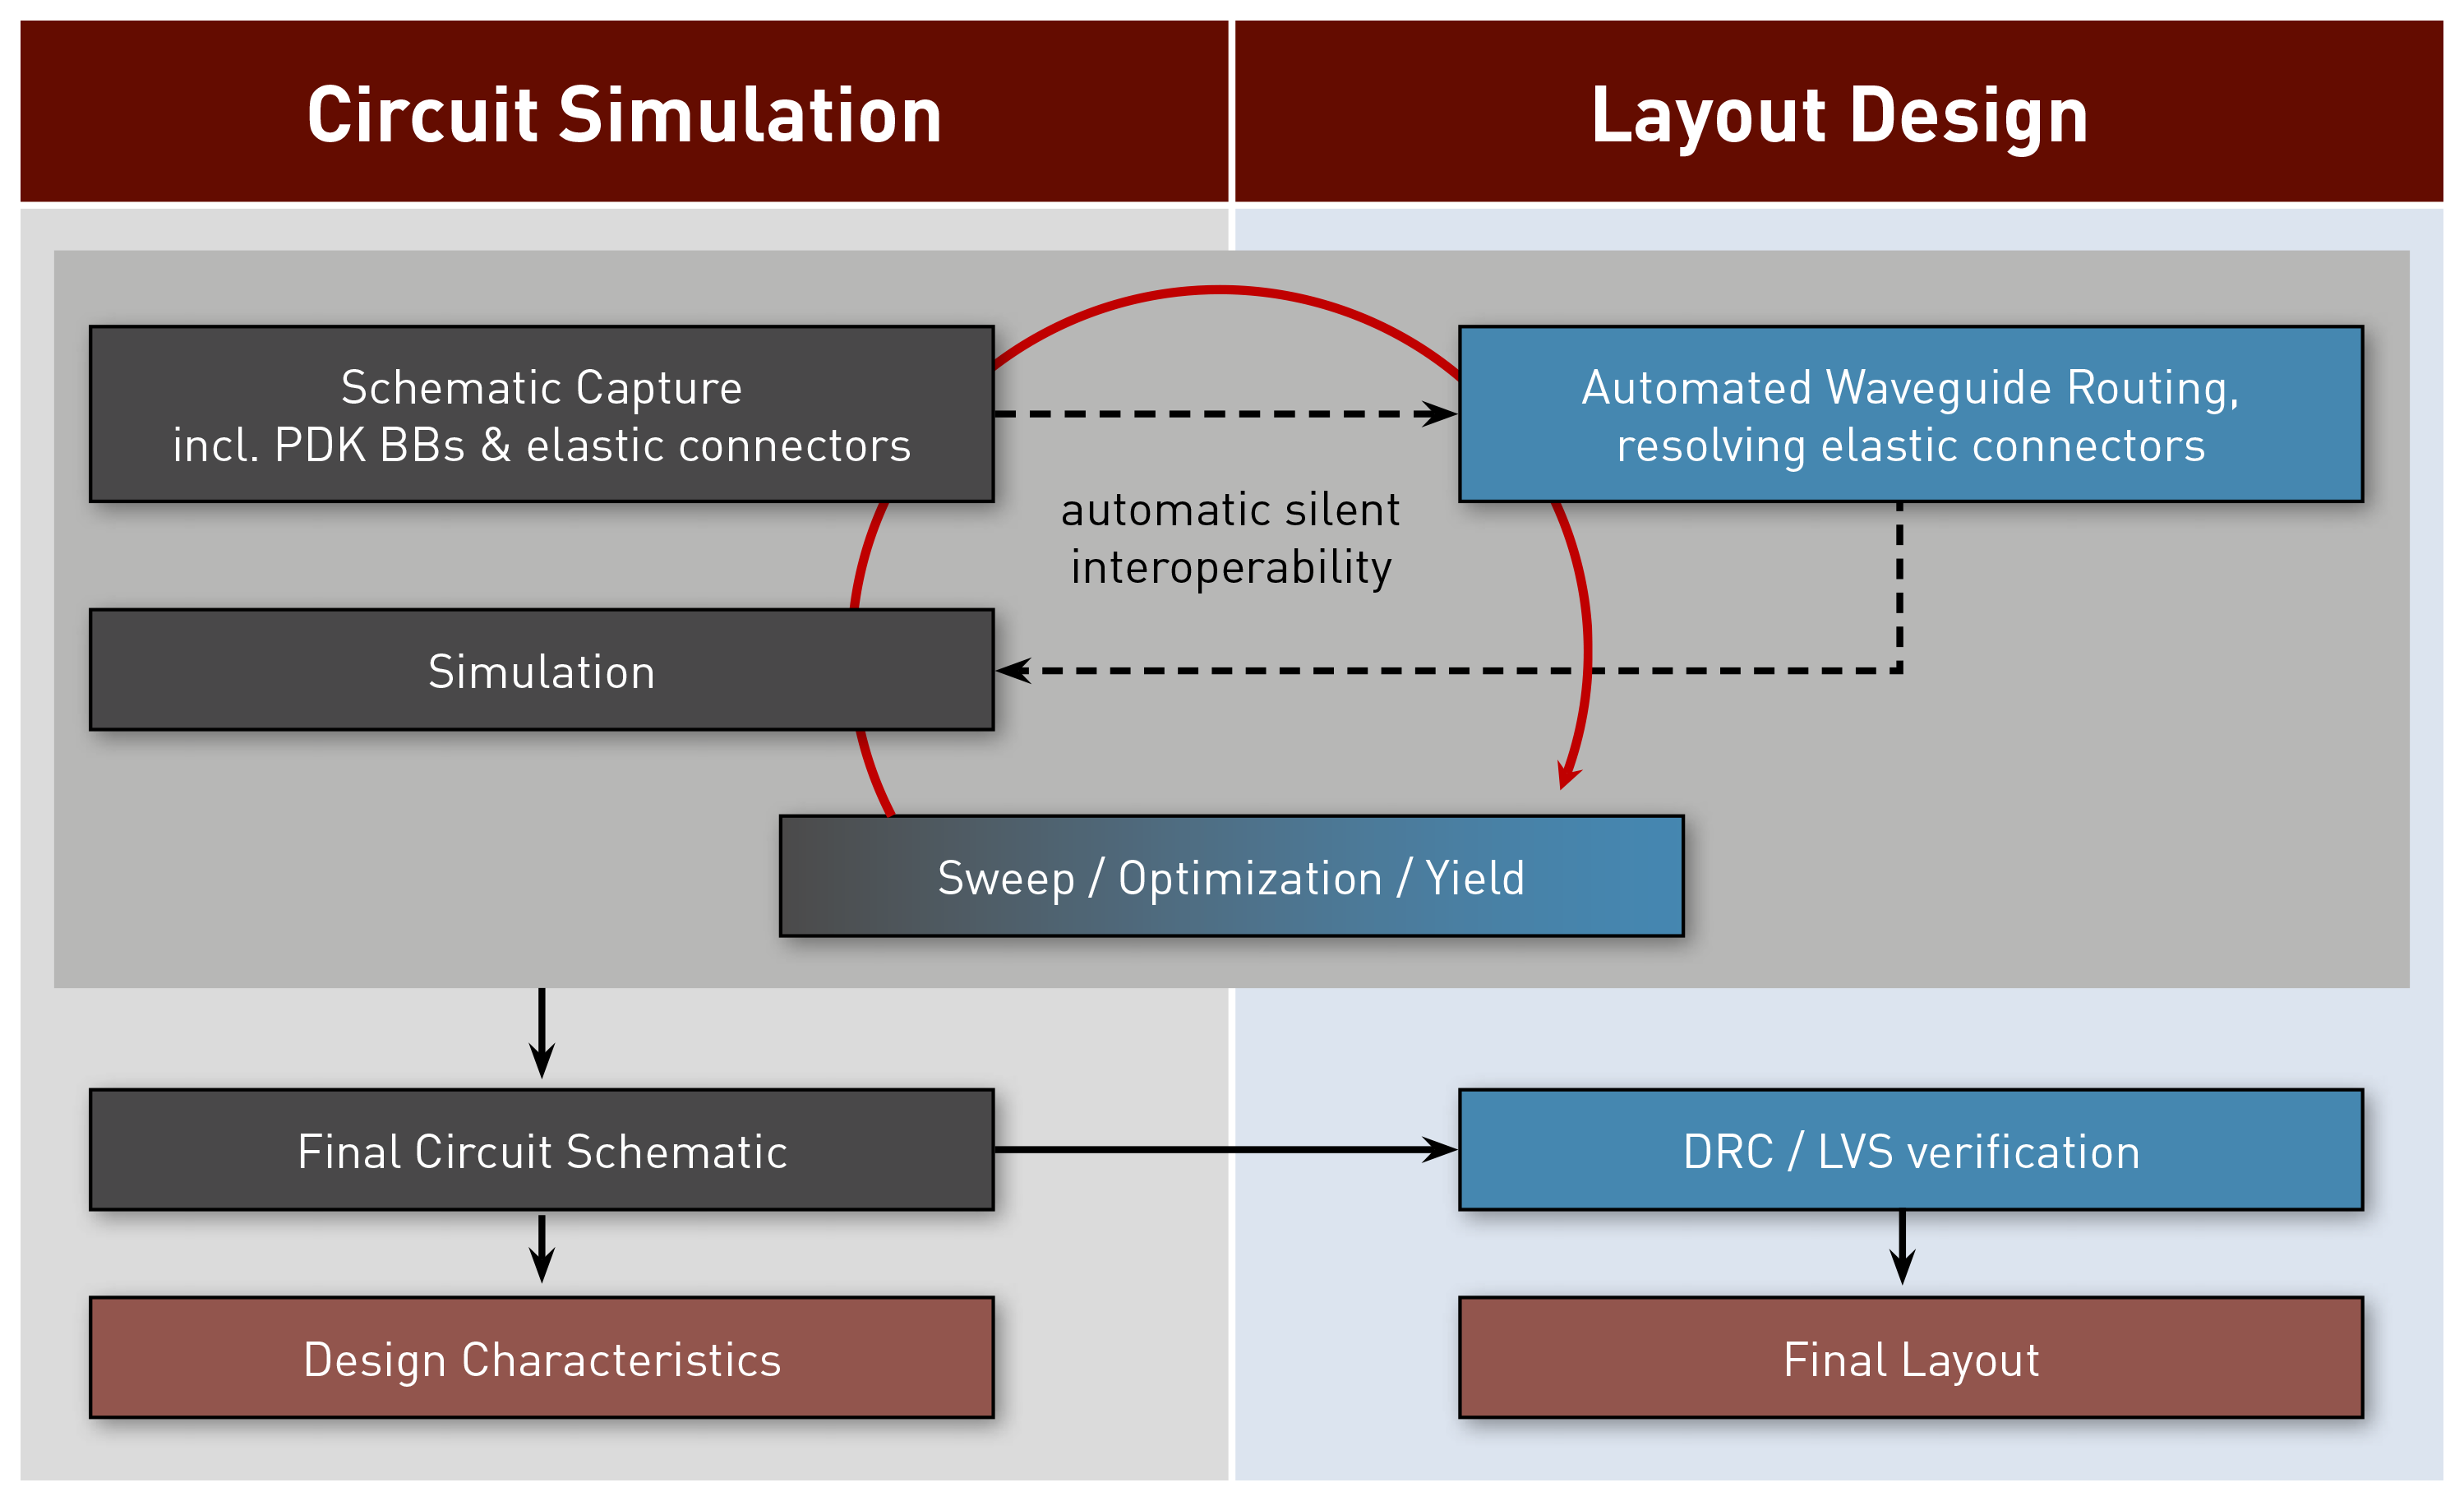 Sketch of layout-aware schematic-driven design methodology